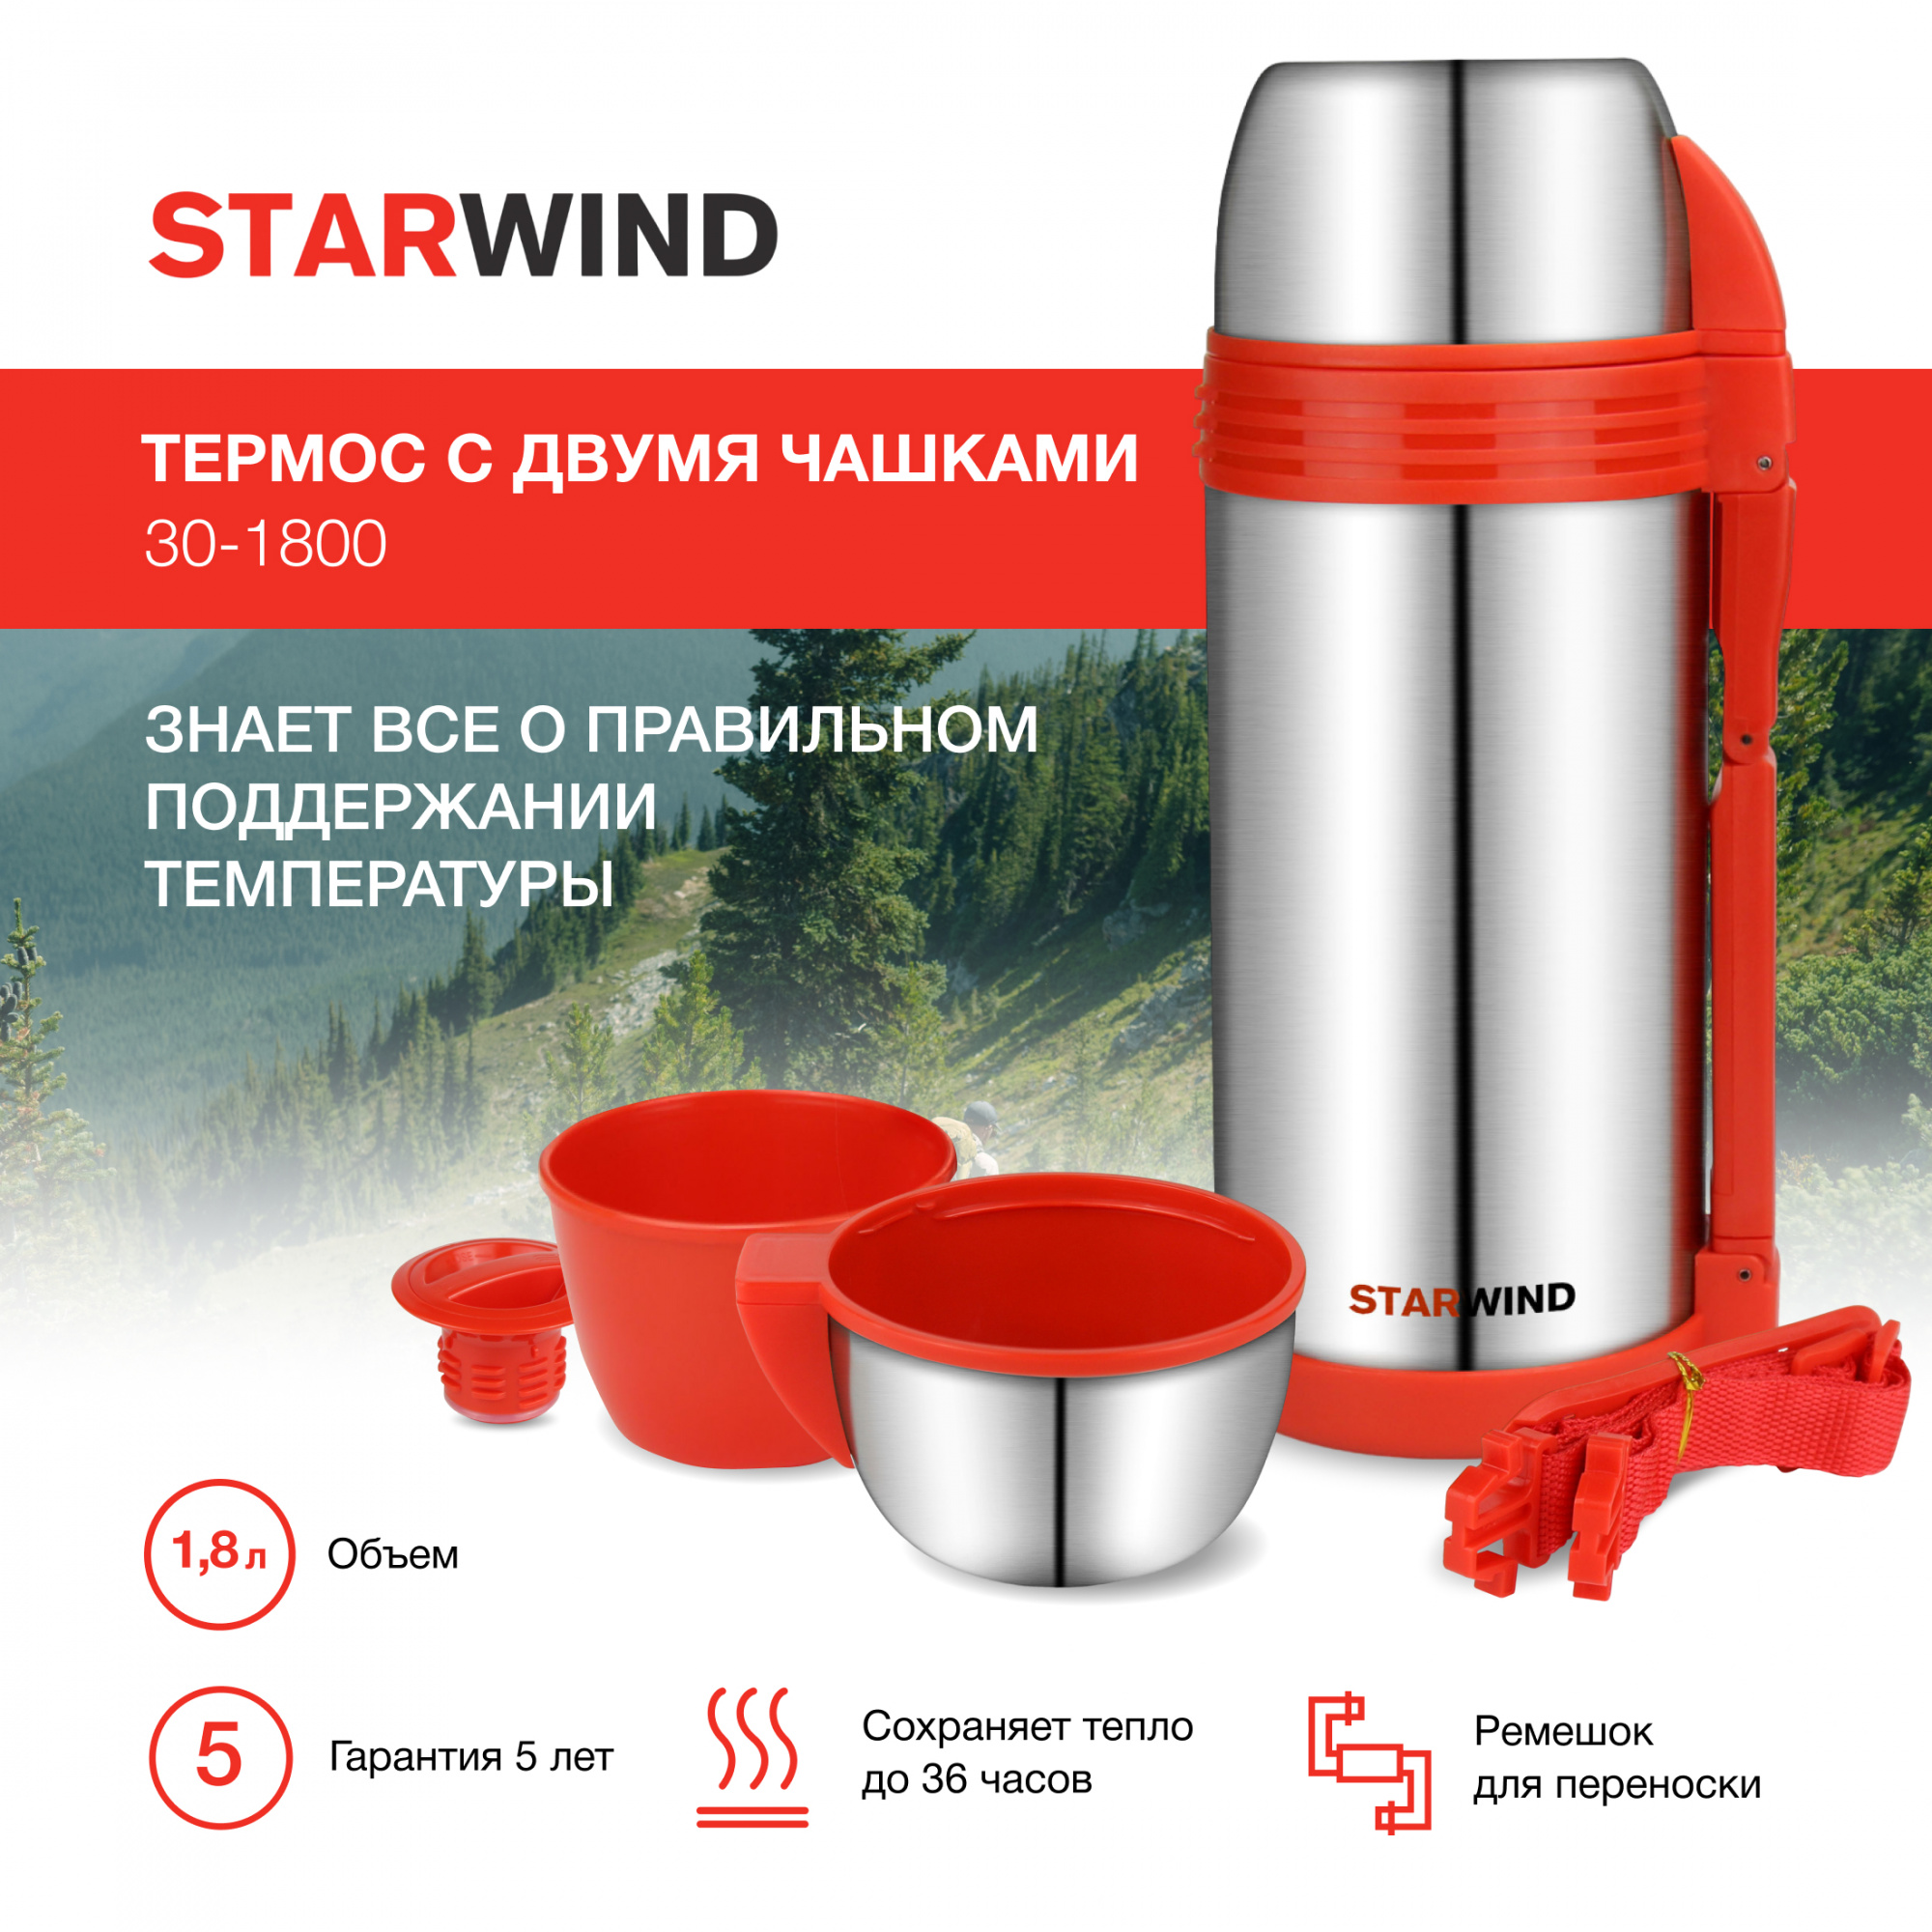 Термос Starwind 30-1800, 1.8л, серебристый/красный от магазина Старвинд